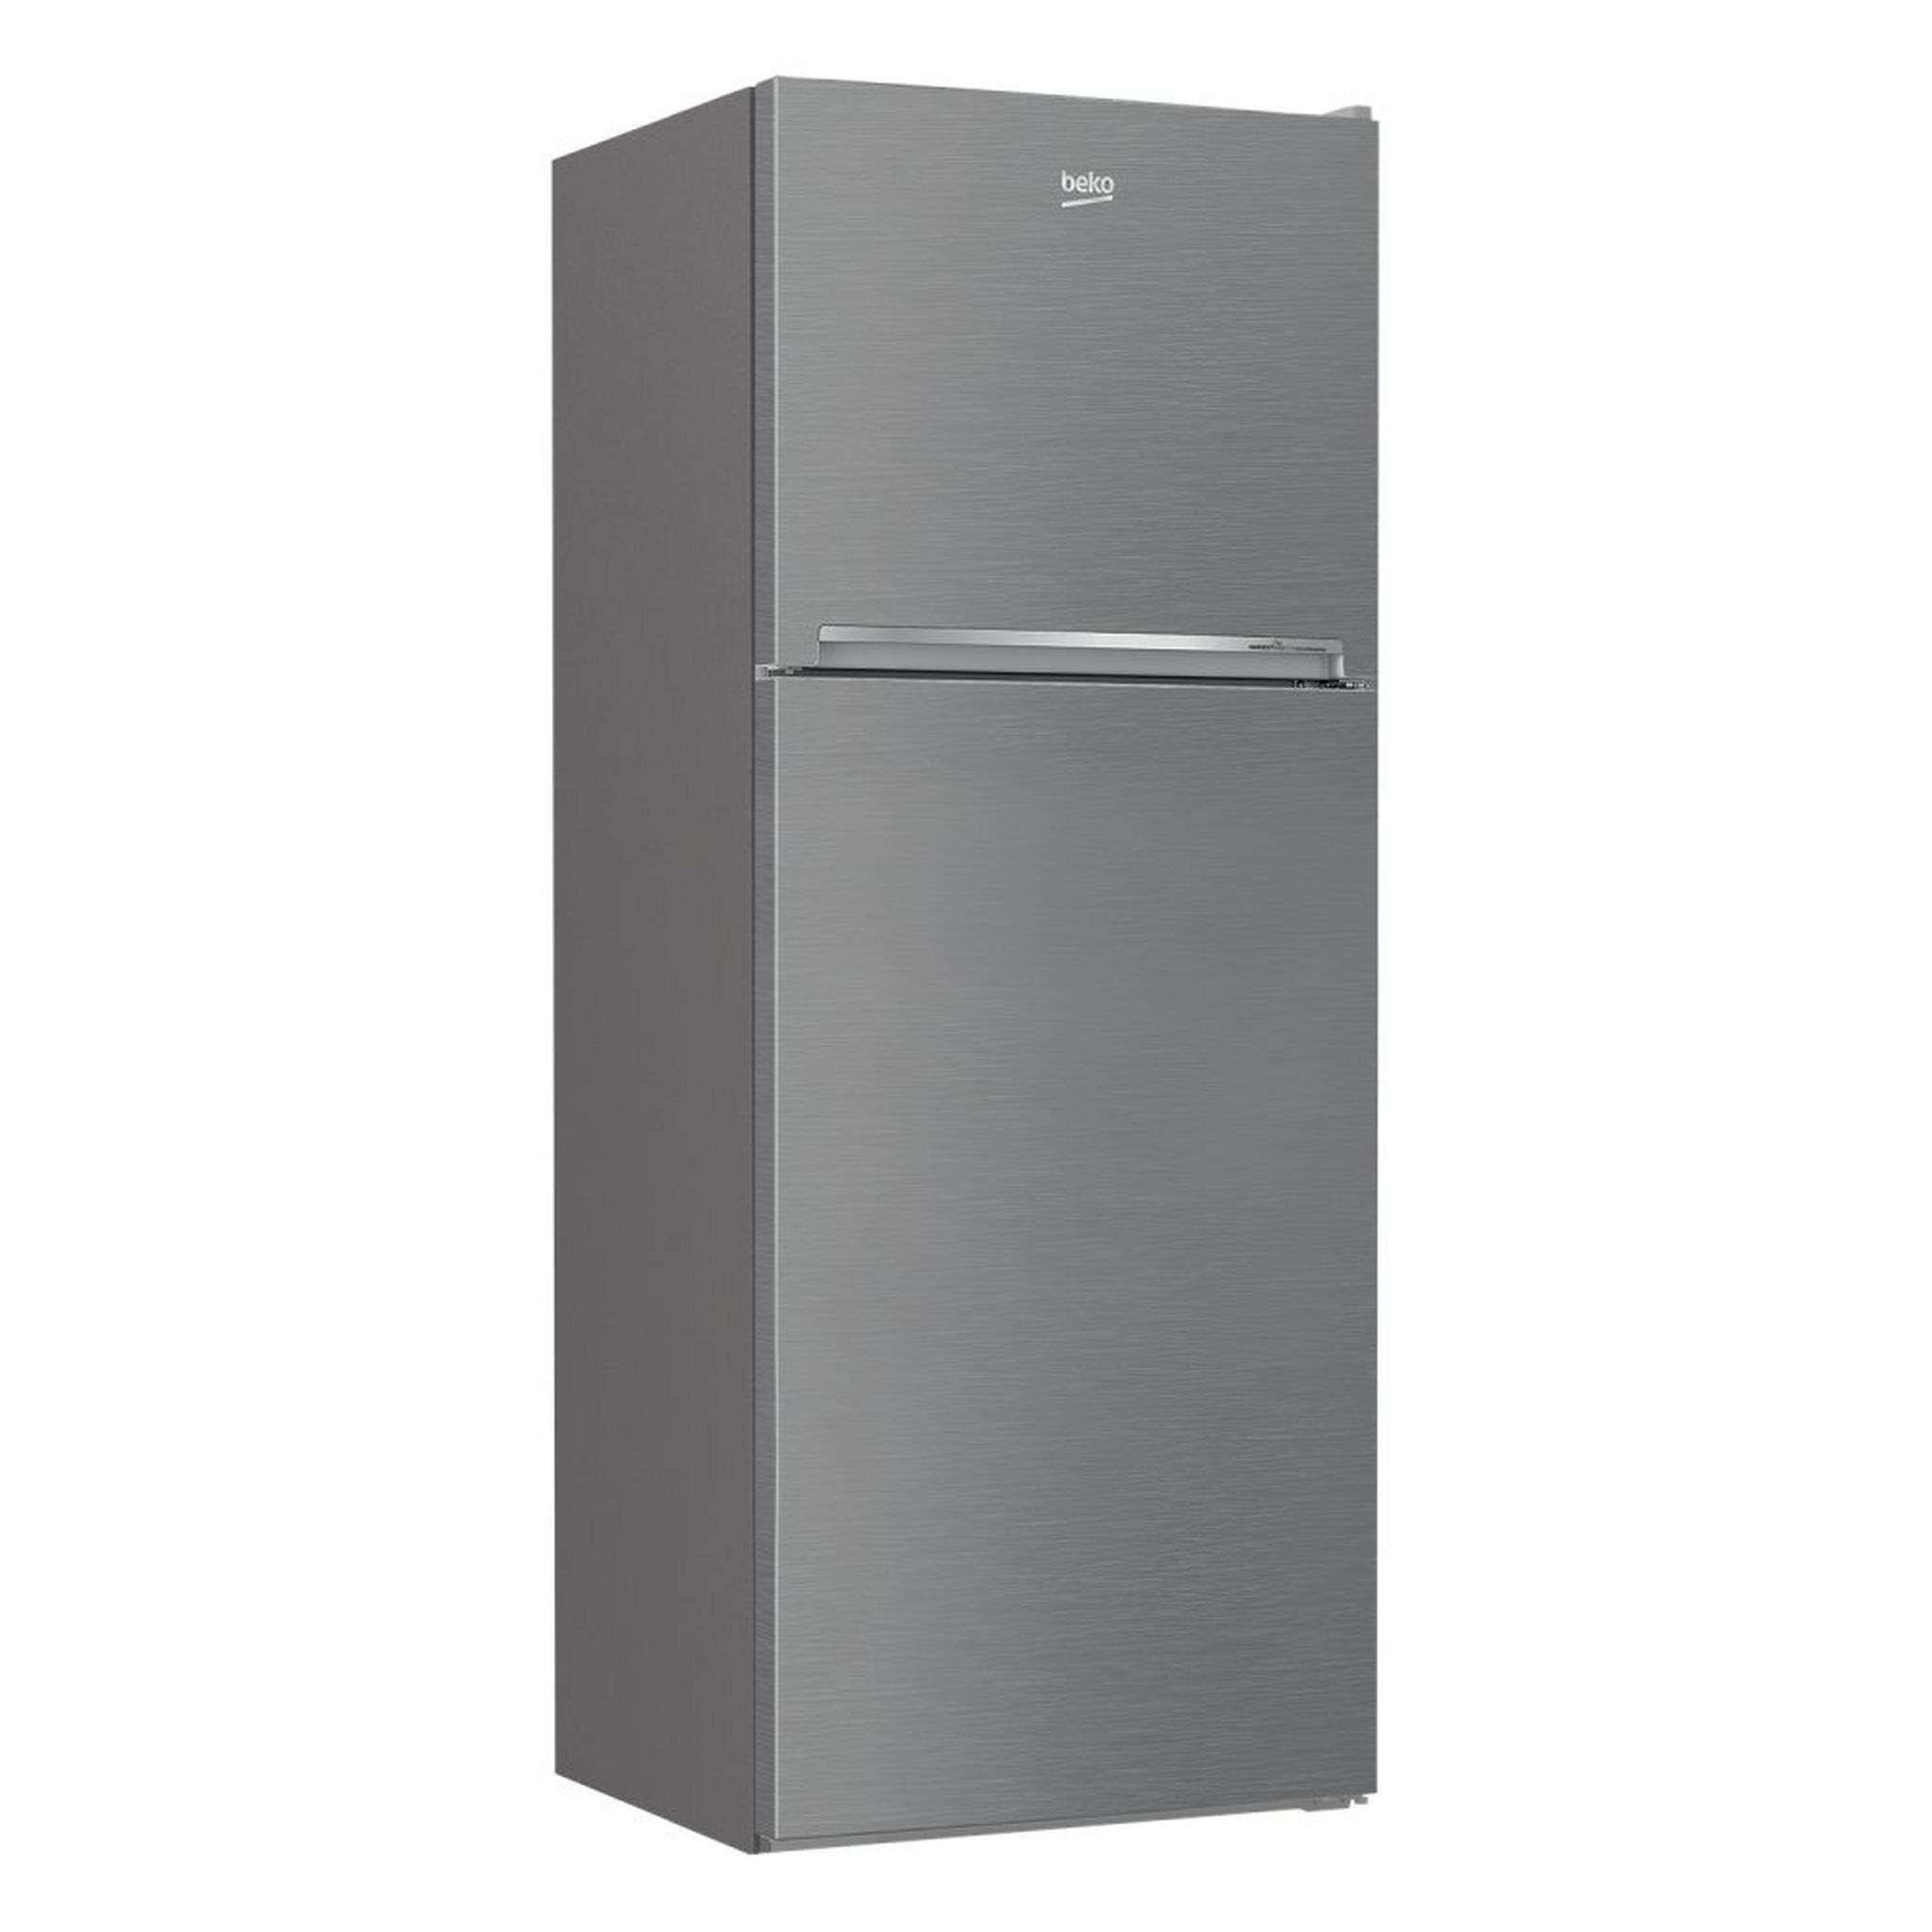 Beko Gas Cooker + Beko Top Freezer Refrigerator + Beko Washing Machine